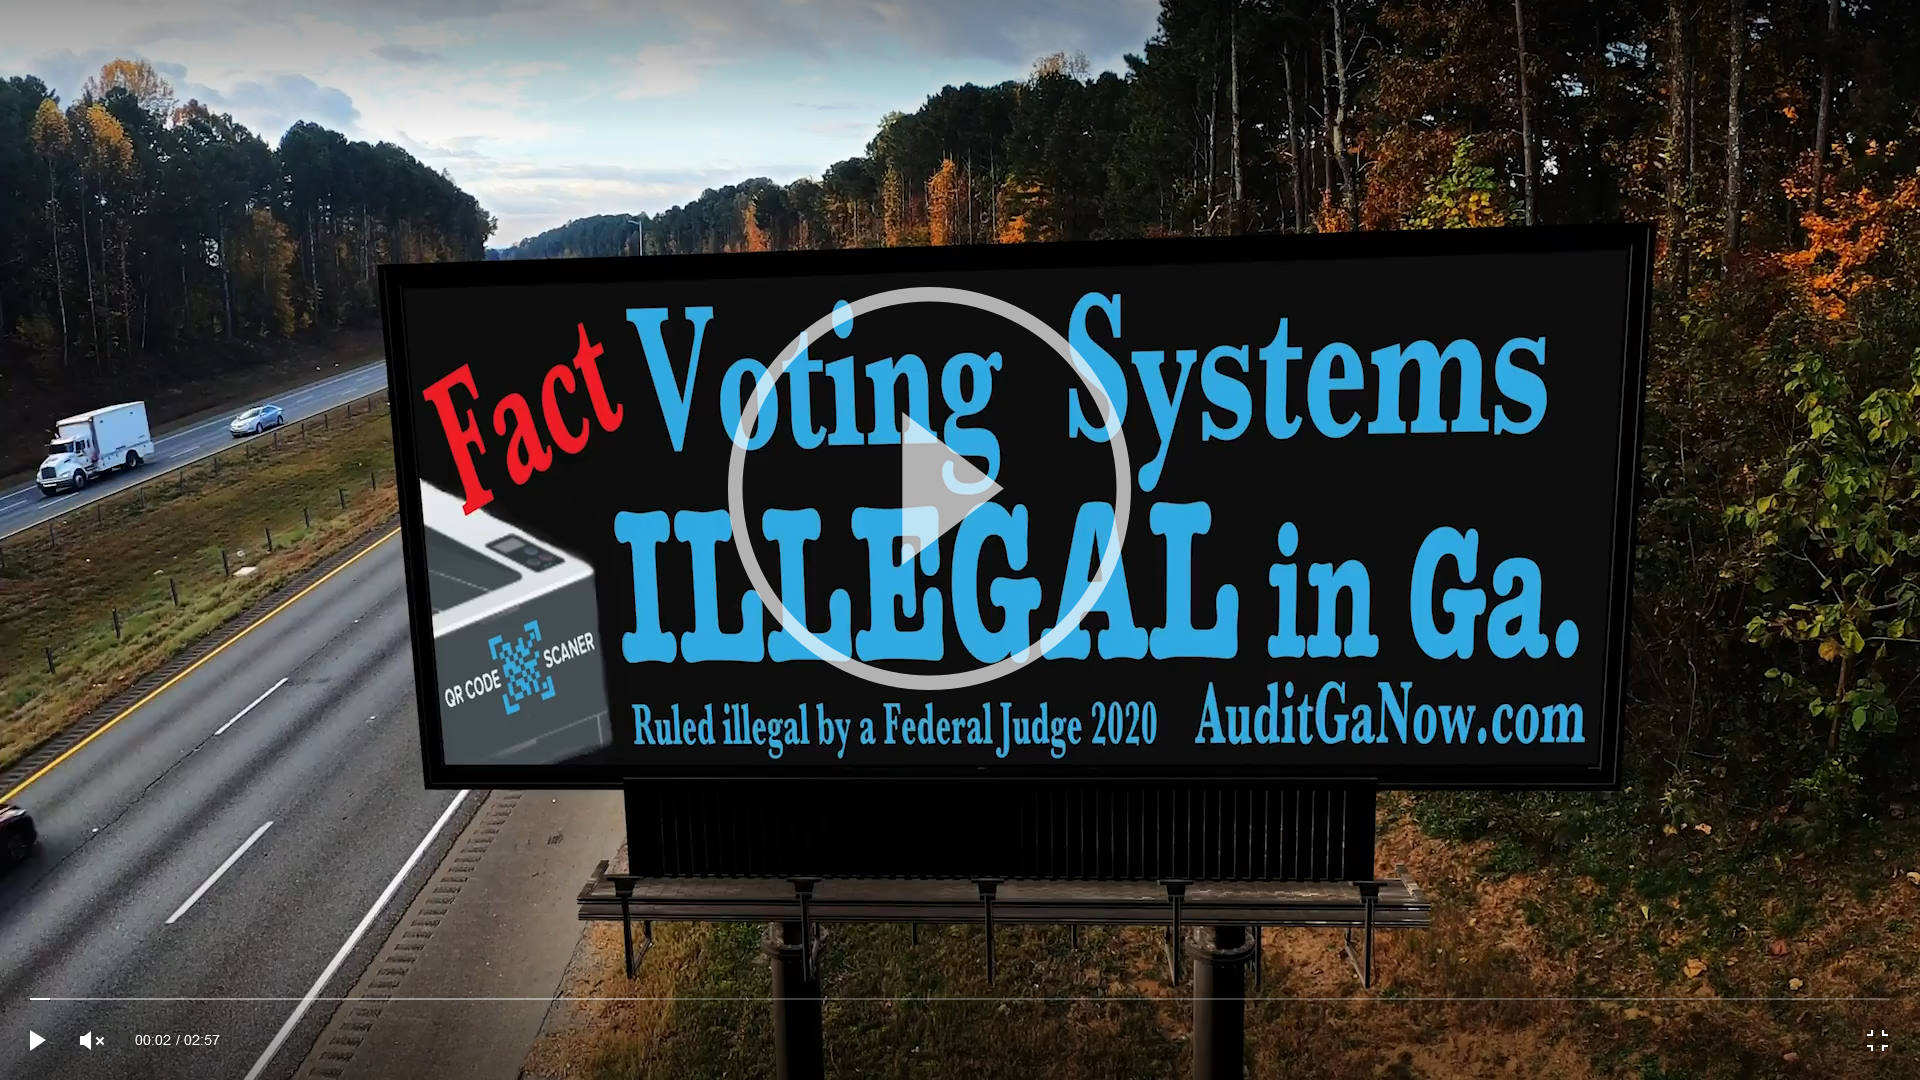 Voting Systems Illegal in Georgia billboard